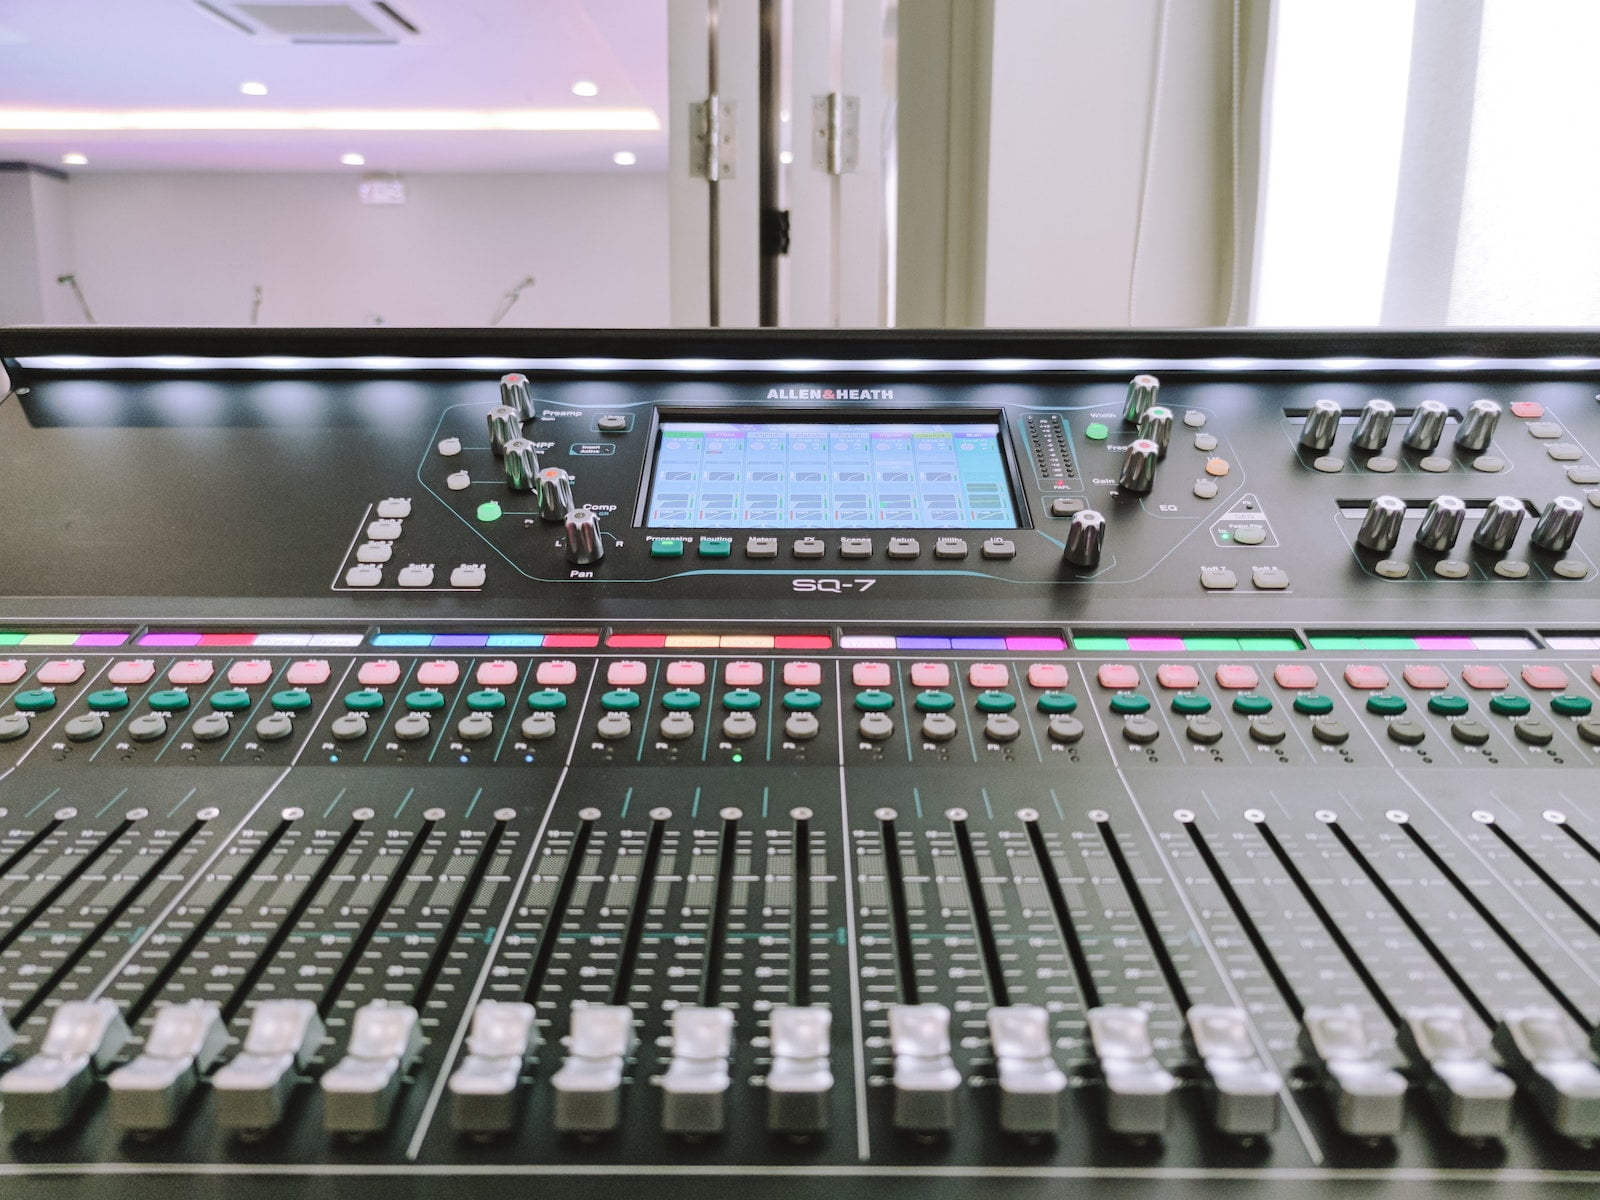 An Audio Mixer Control Panel in Close-up Shot